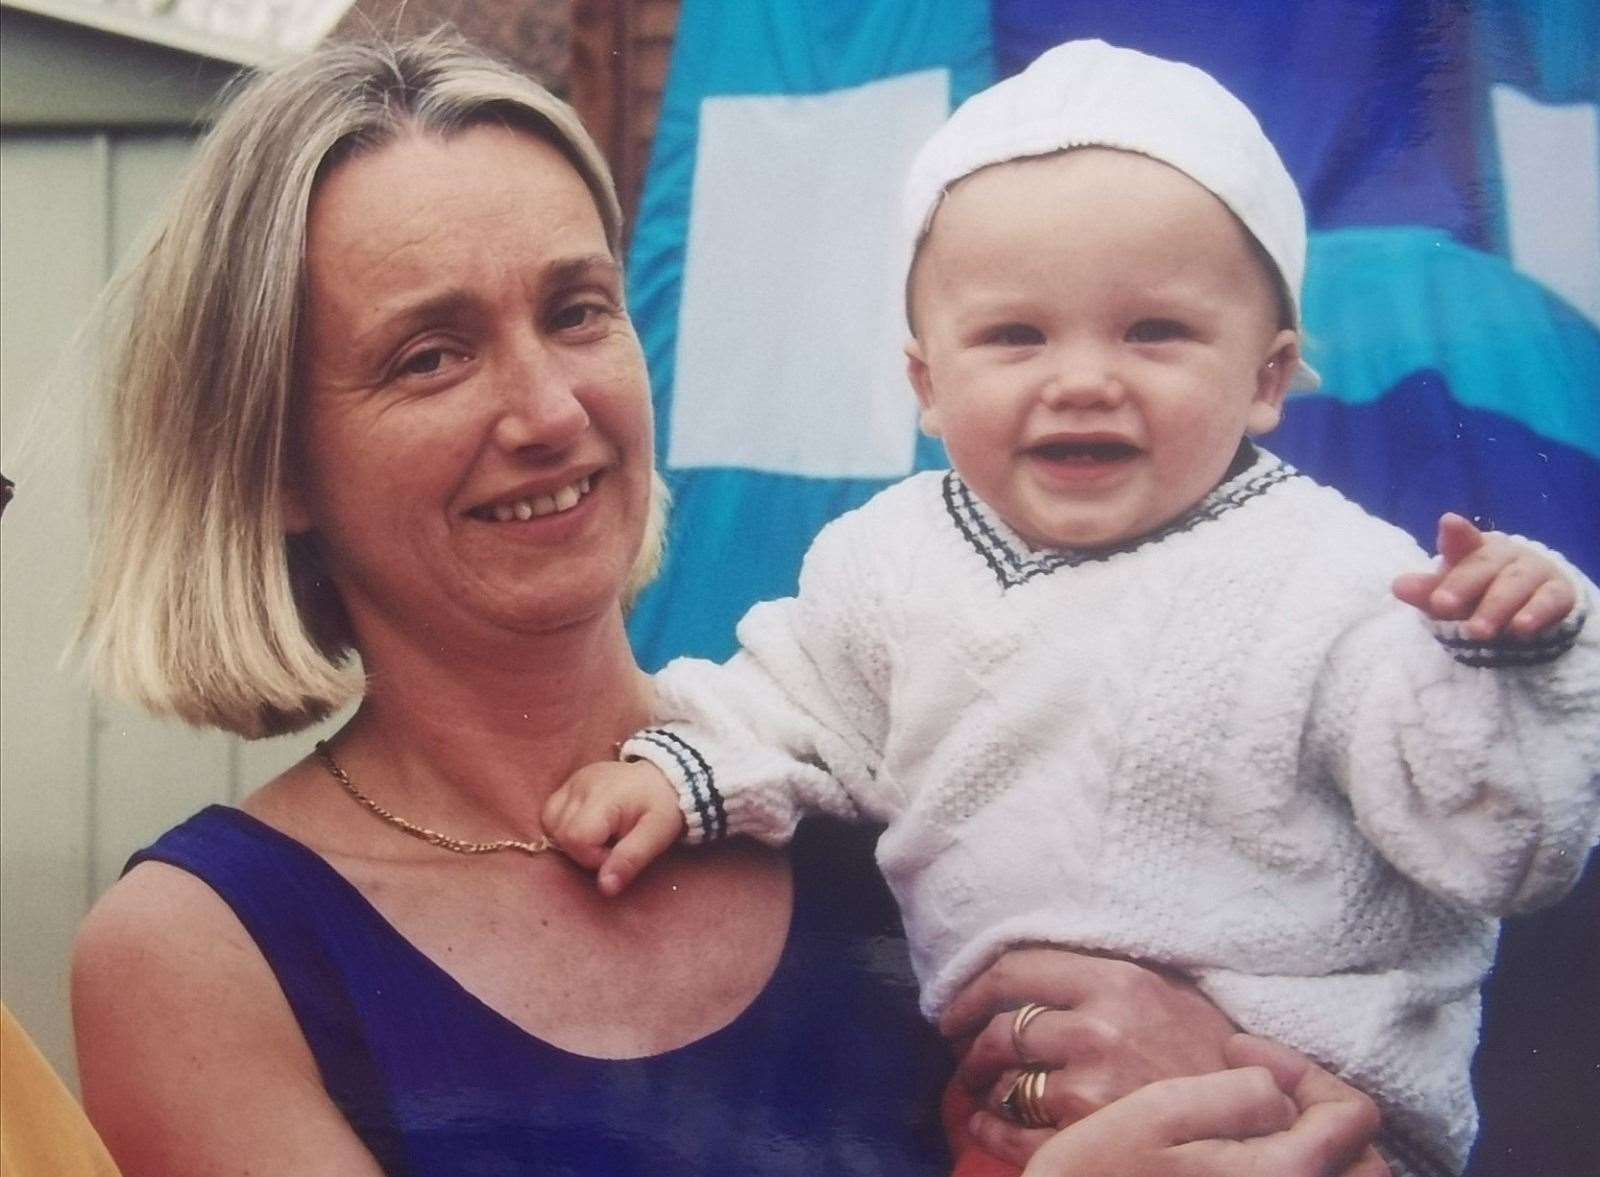 Joe pictured with his mum, Melanie